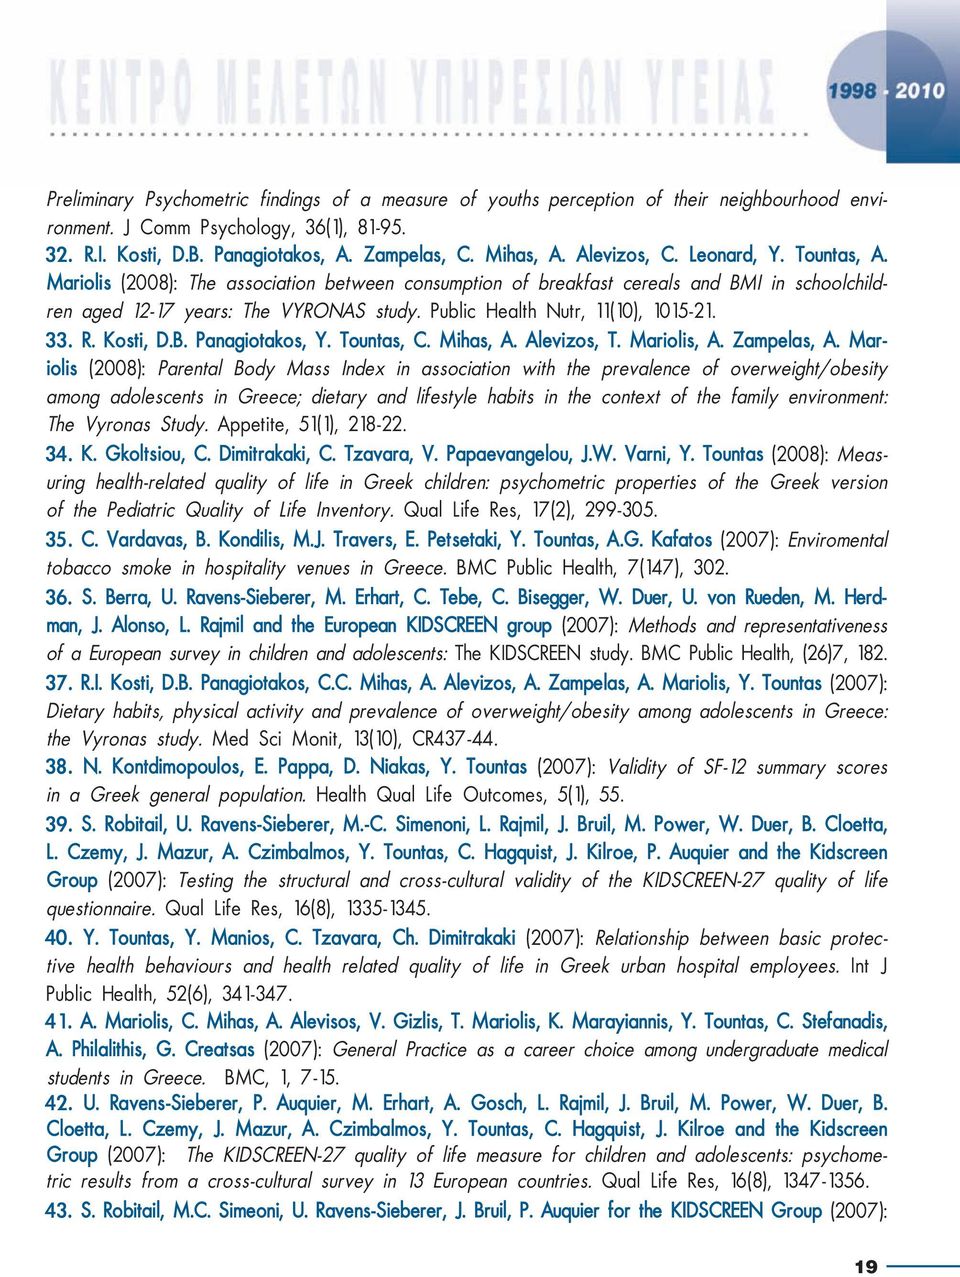 Public Health Nutr, 11(10), 1015-21. 33. R. Kosti, D.B. Panagiotakos, Y. Tountas, C. Mihas, A. Alevizos, T. Mariolis, A. Zampelas, A.